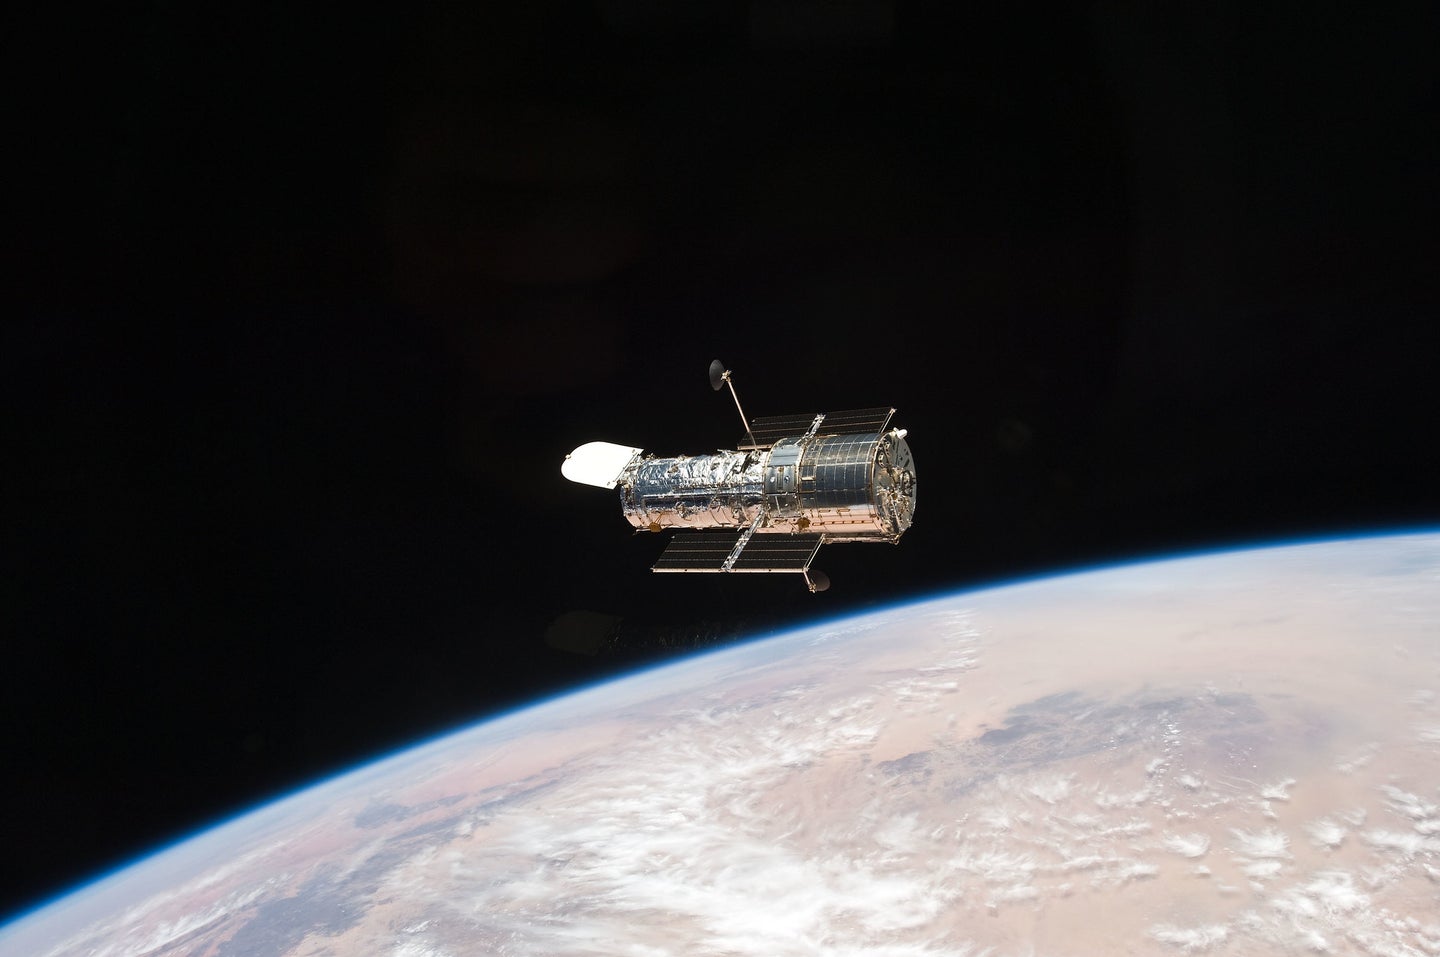 The Hubble telescope in orbit.